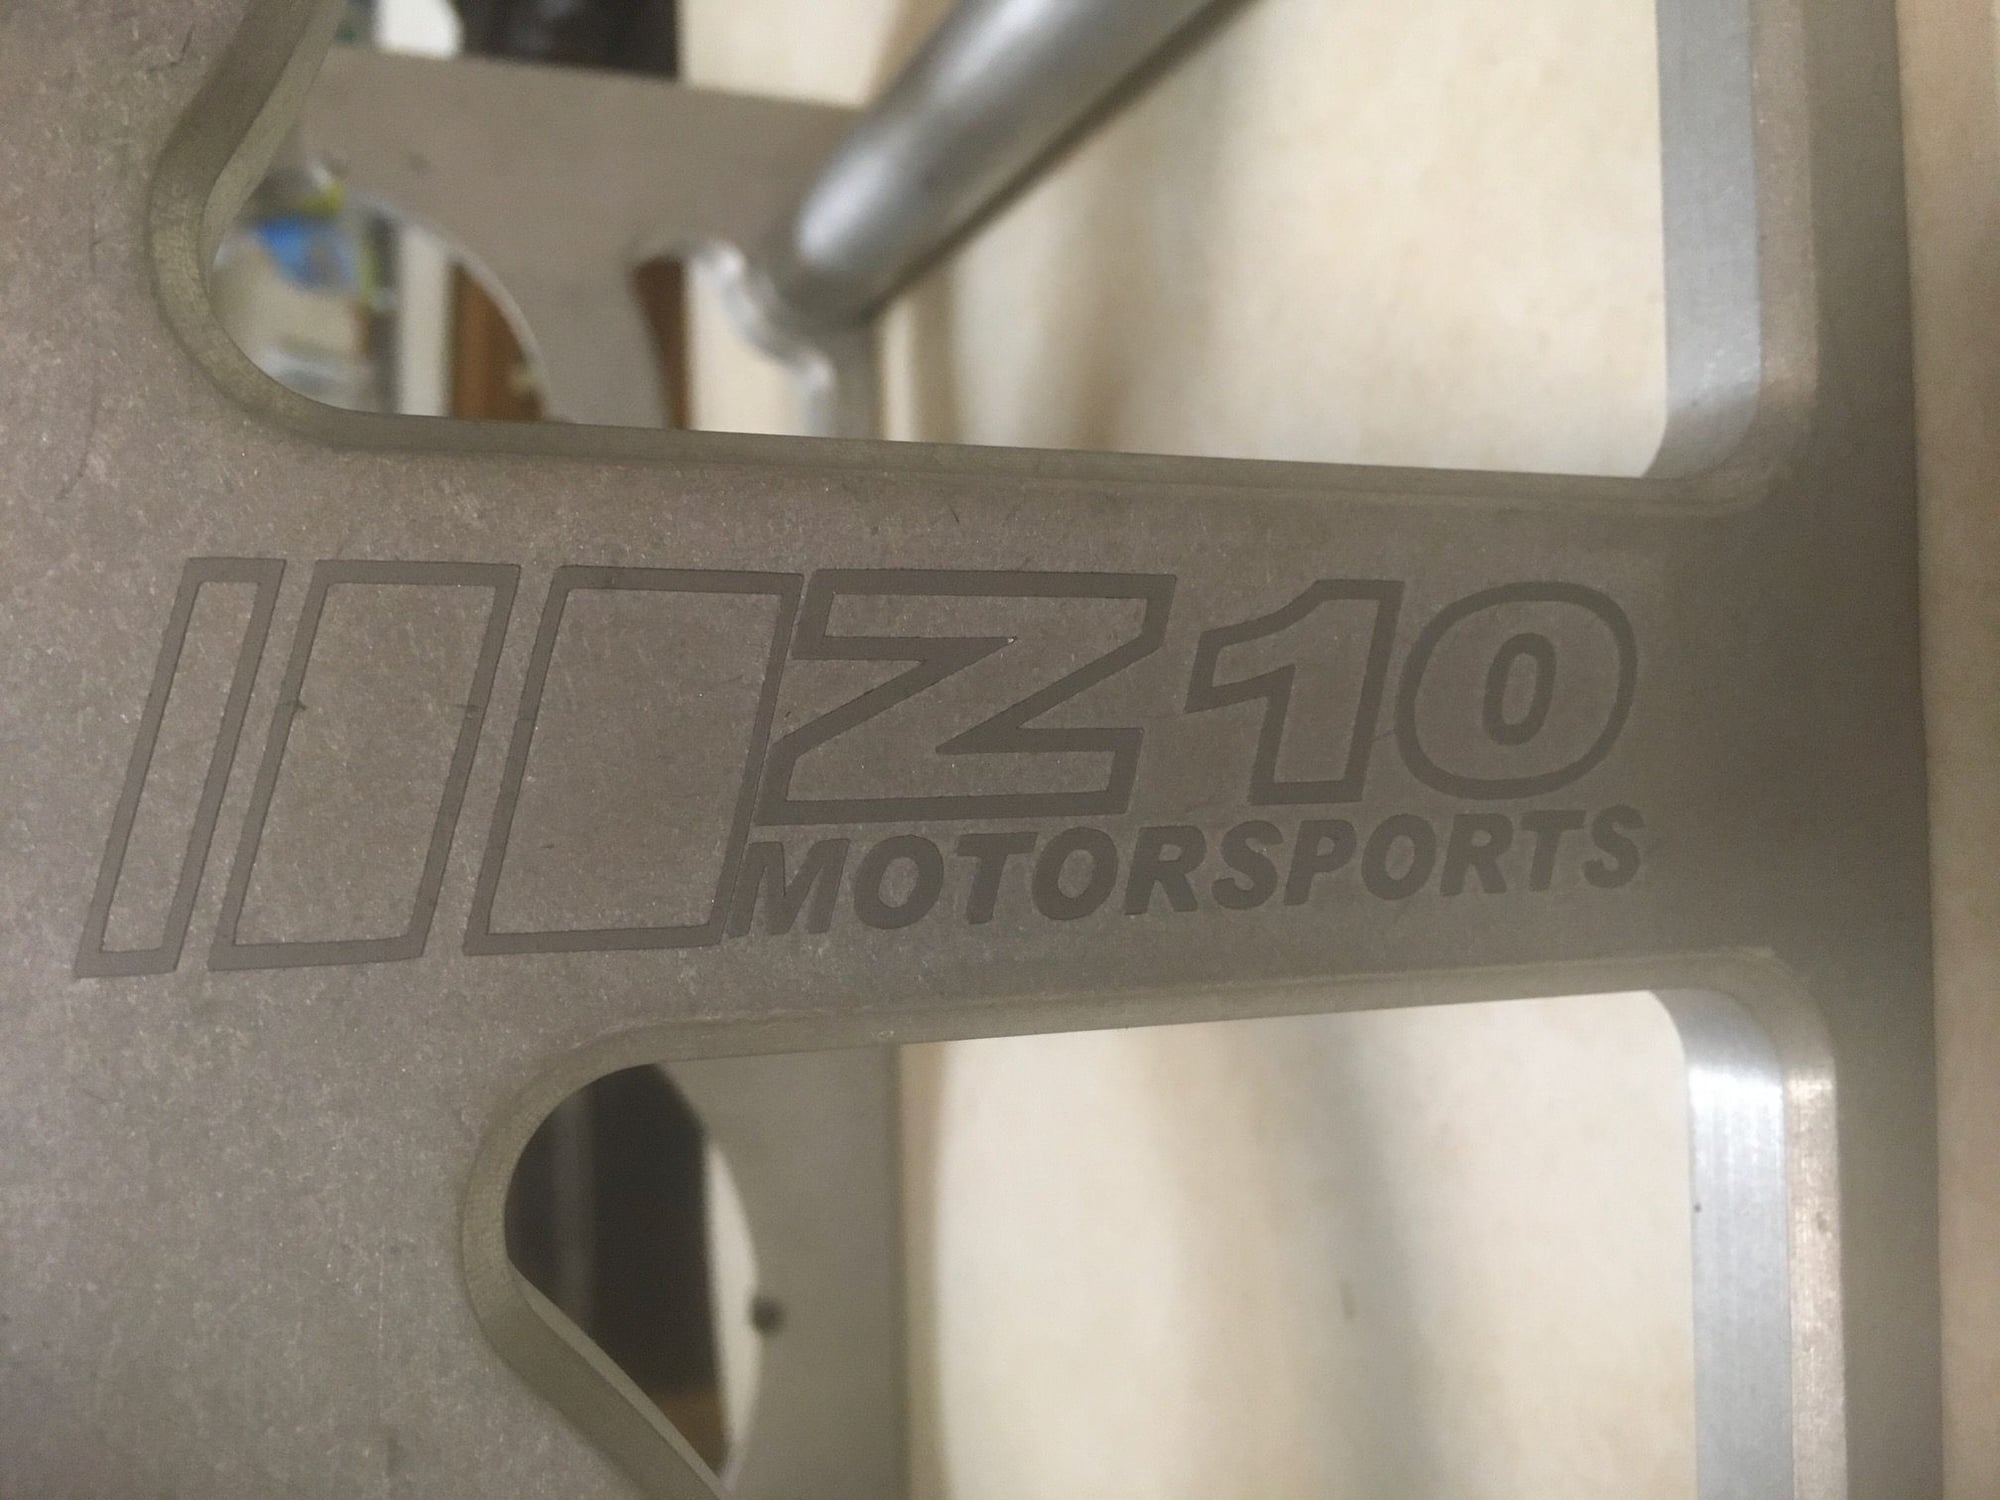  - F/S Z10 Motorsports Nitrous/Nano bottle bracket - Trenton, NJ 08620, United States